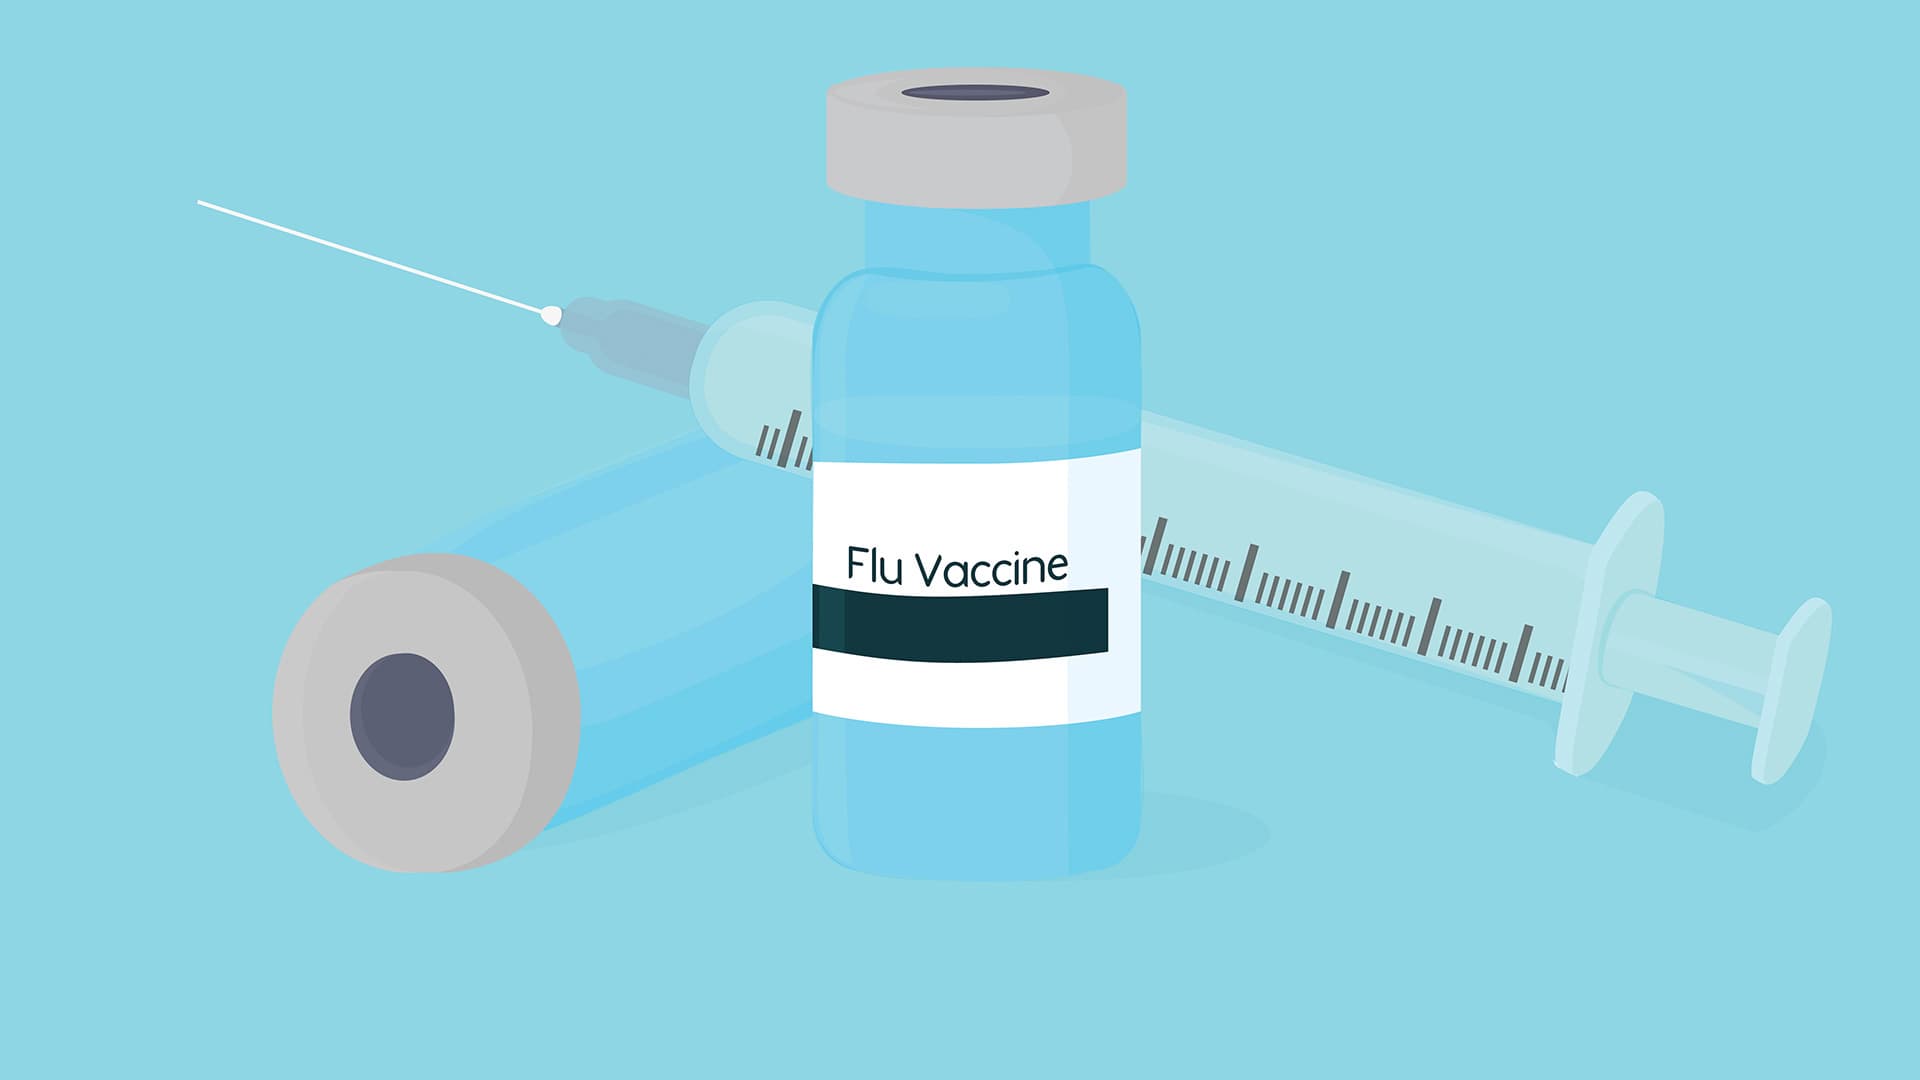 Illustration of flu vaccine